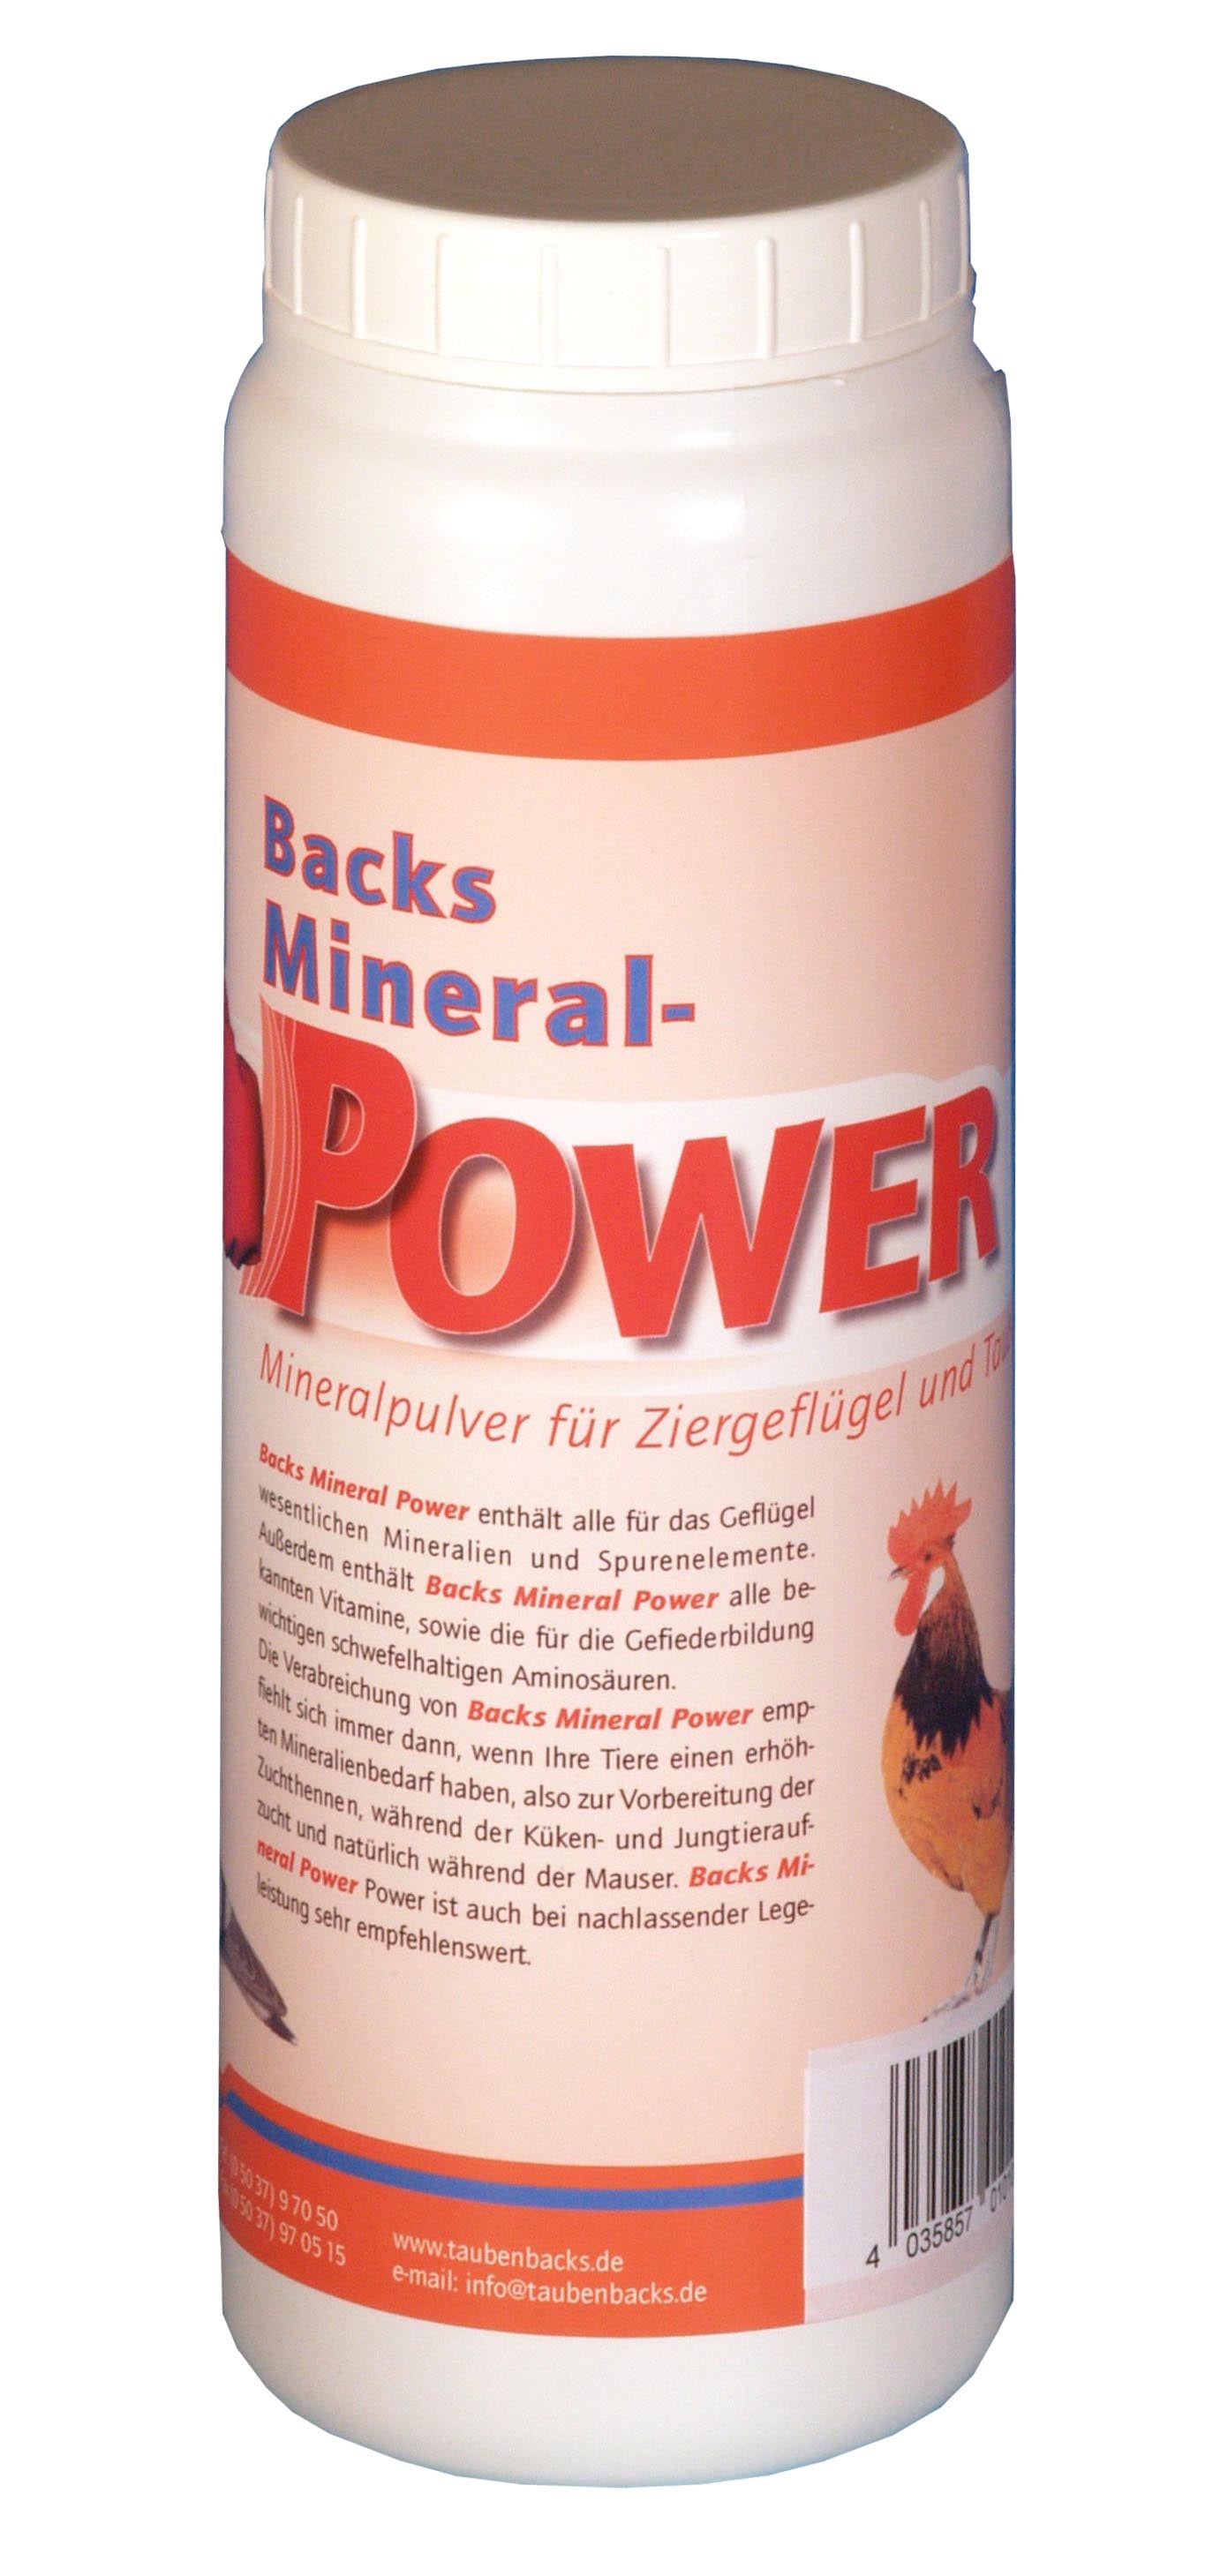 Backs Mineral Power (1kg)